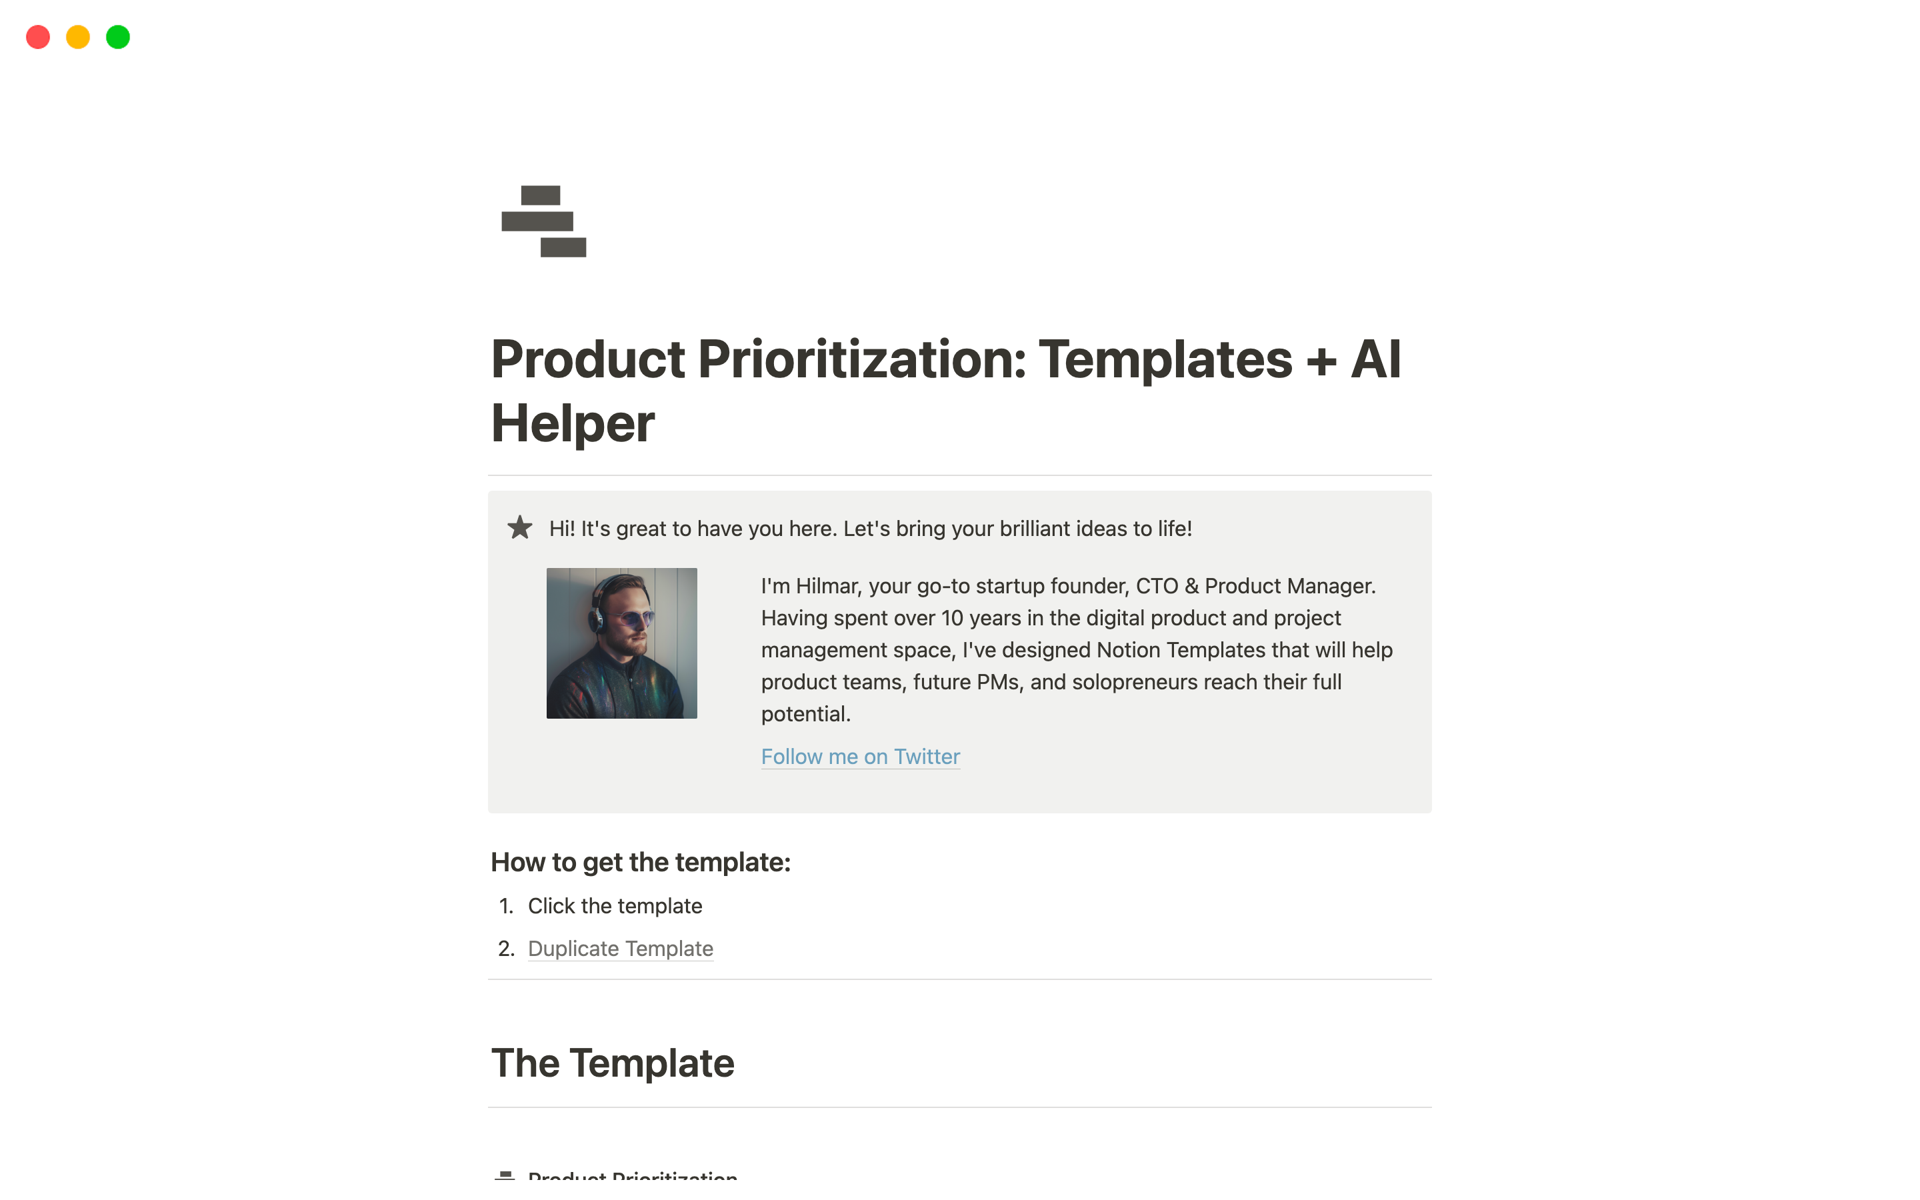 Product Prioritization: Templates + AI Helper님의 템플릿 미리보기